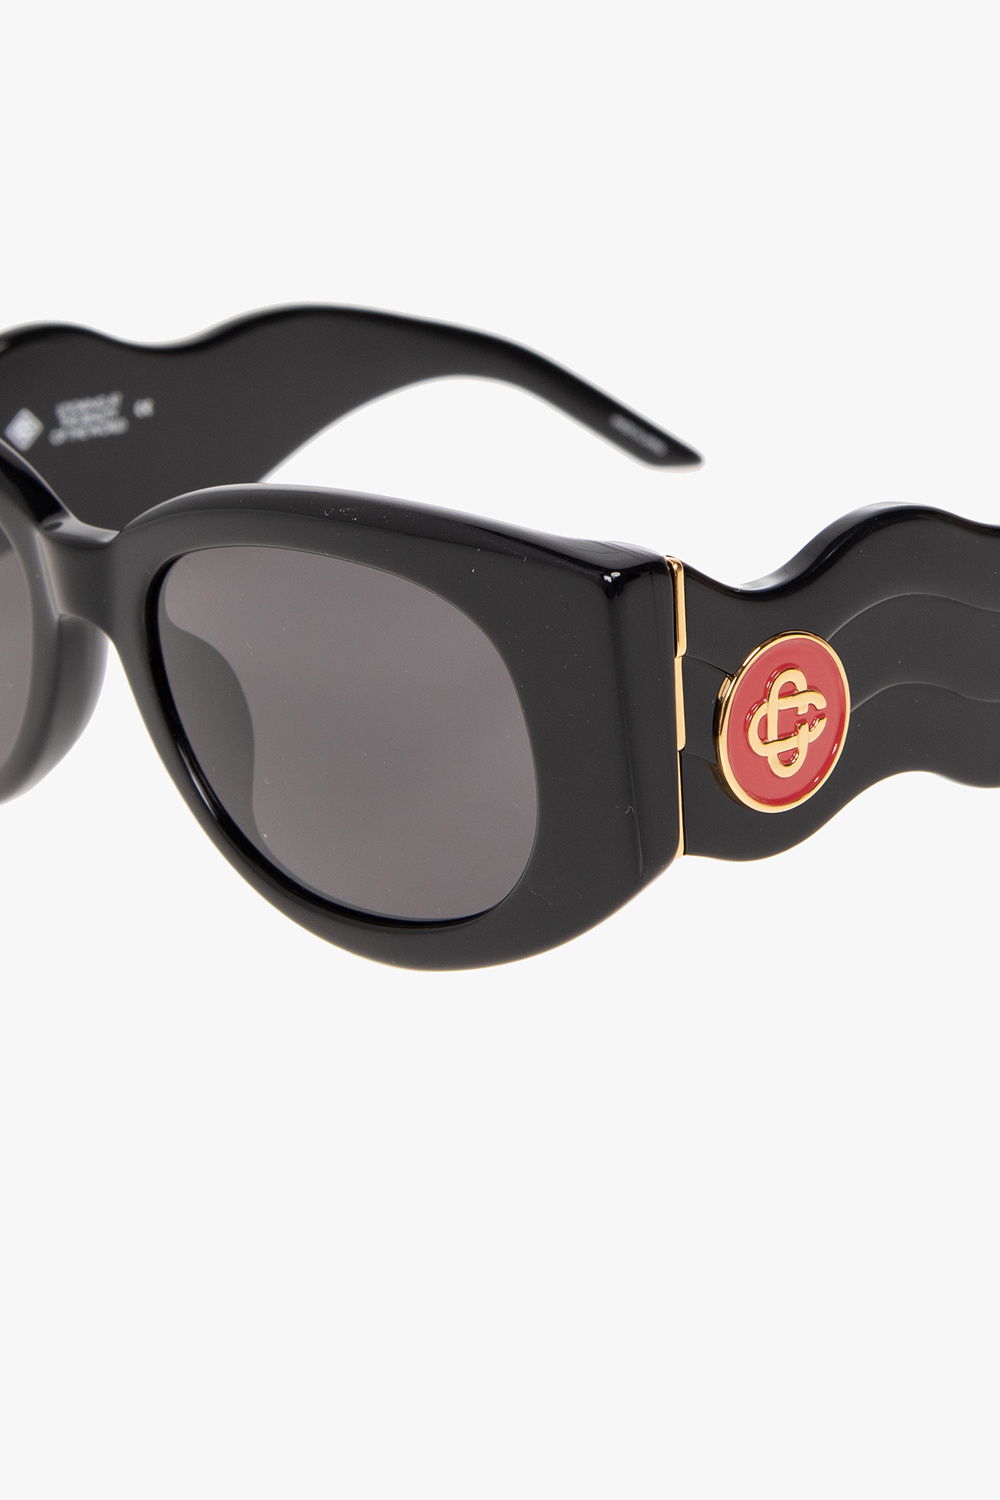 Casablanca Protections frame sunglasses